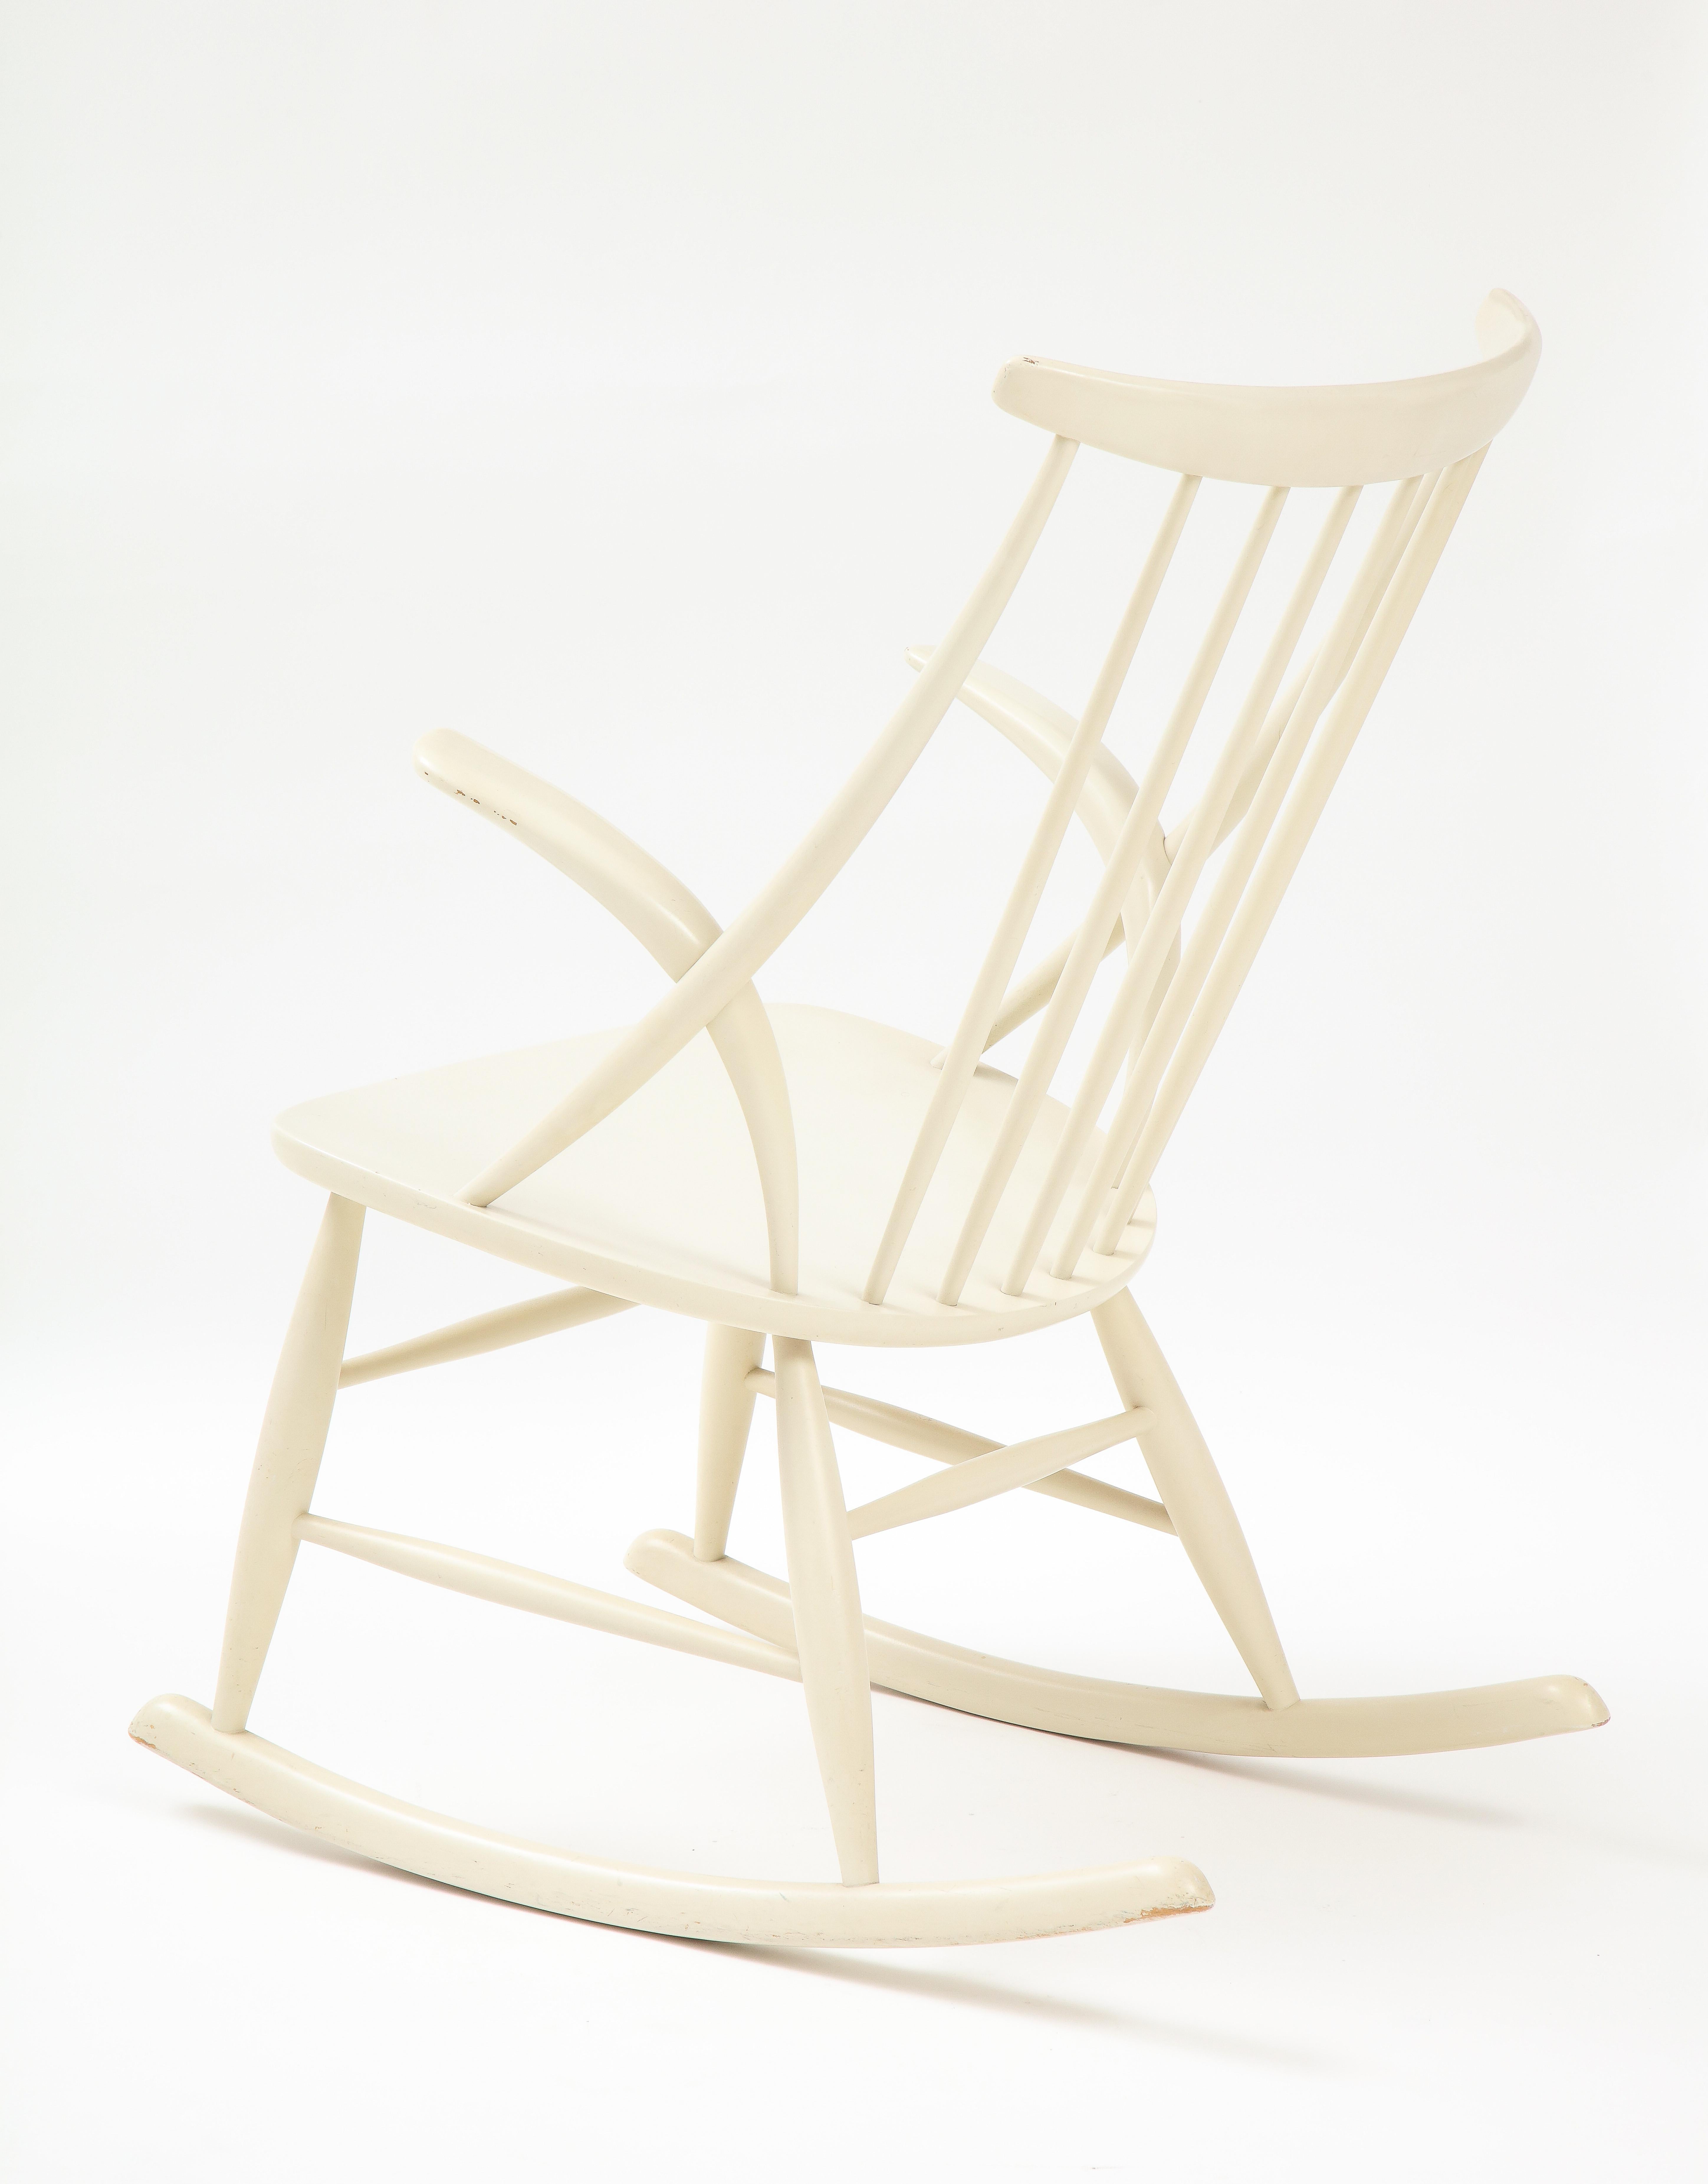 Illum Wikkelsø Rocking Chair, Mod. Iw3, Niels Eilersen, Denmark, 1958 2